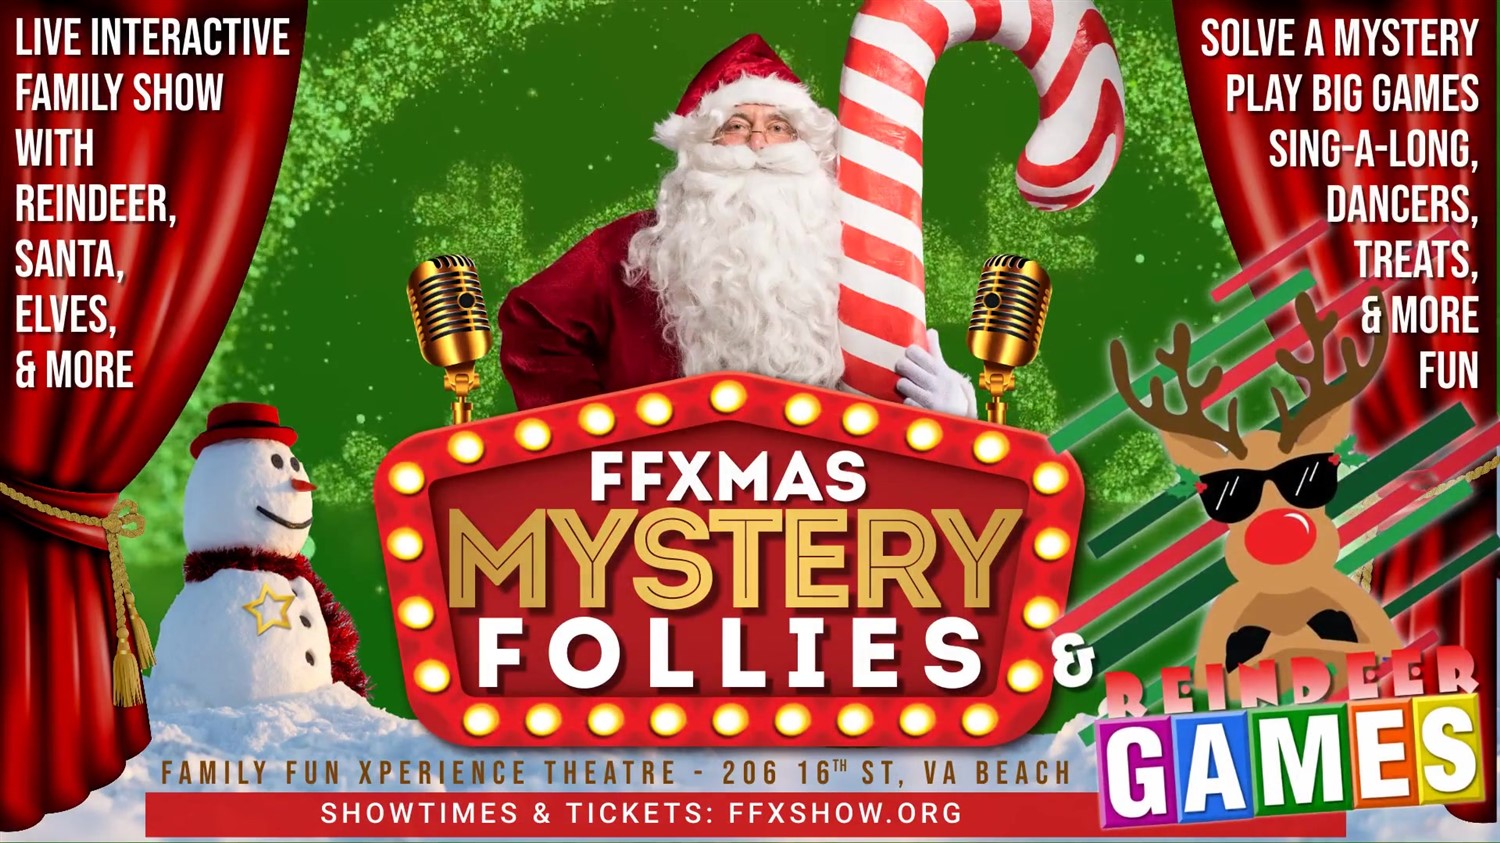 FFXmas MYSTERY FOLLIES Plus Bonus Reindeer Games on dic. 09, 19:00@FFX Theatre - Elegir asientoCompra entradas y obtén información enFamily Fun Xperience tickets.ffxshow.org